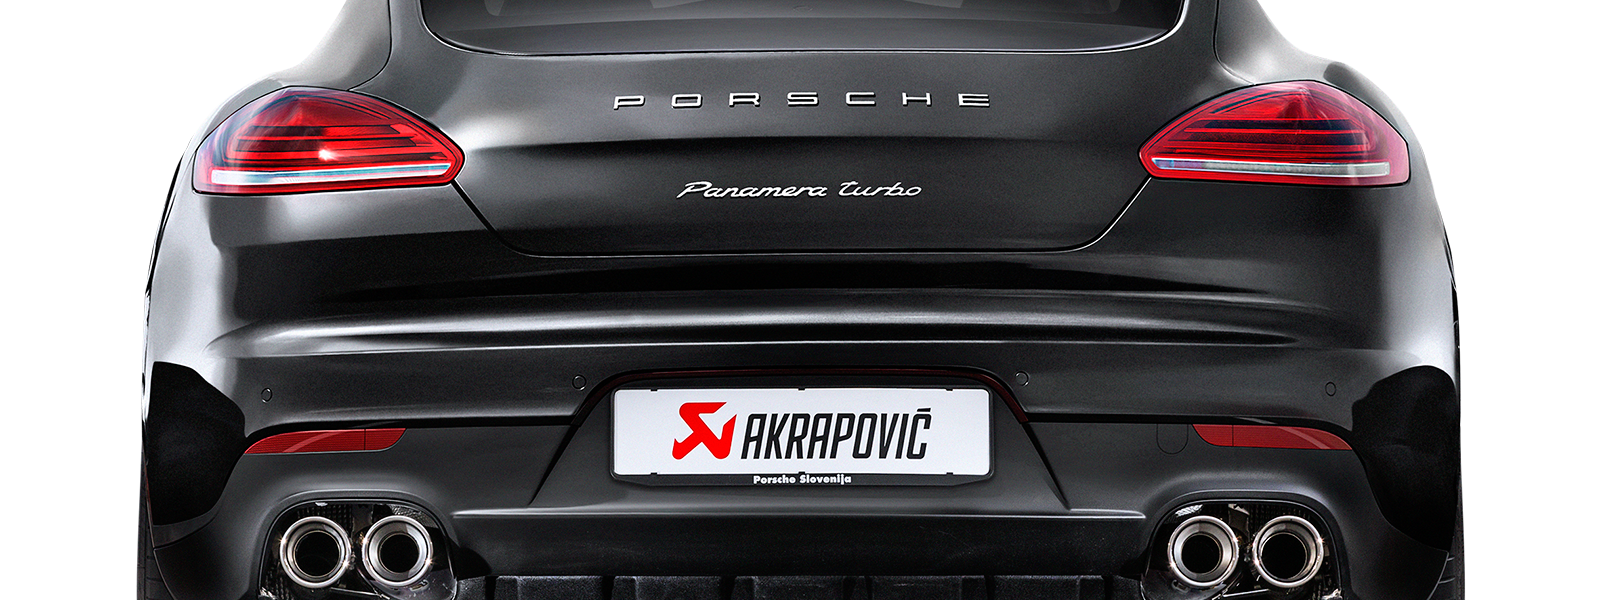 Performance díly pro automobil Porsche Panamera Turbo S 970 FL